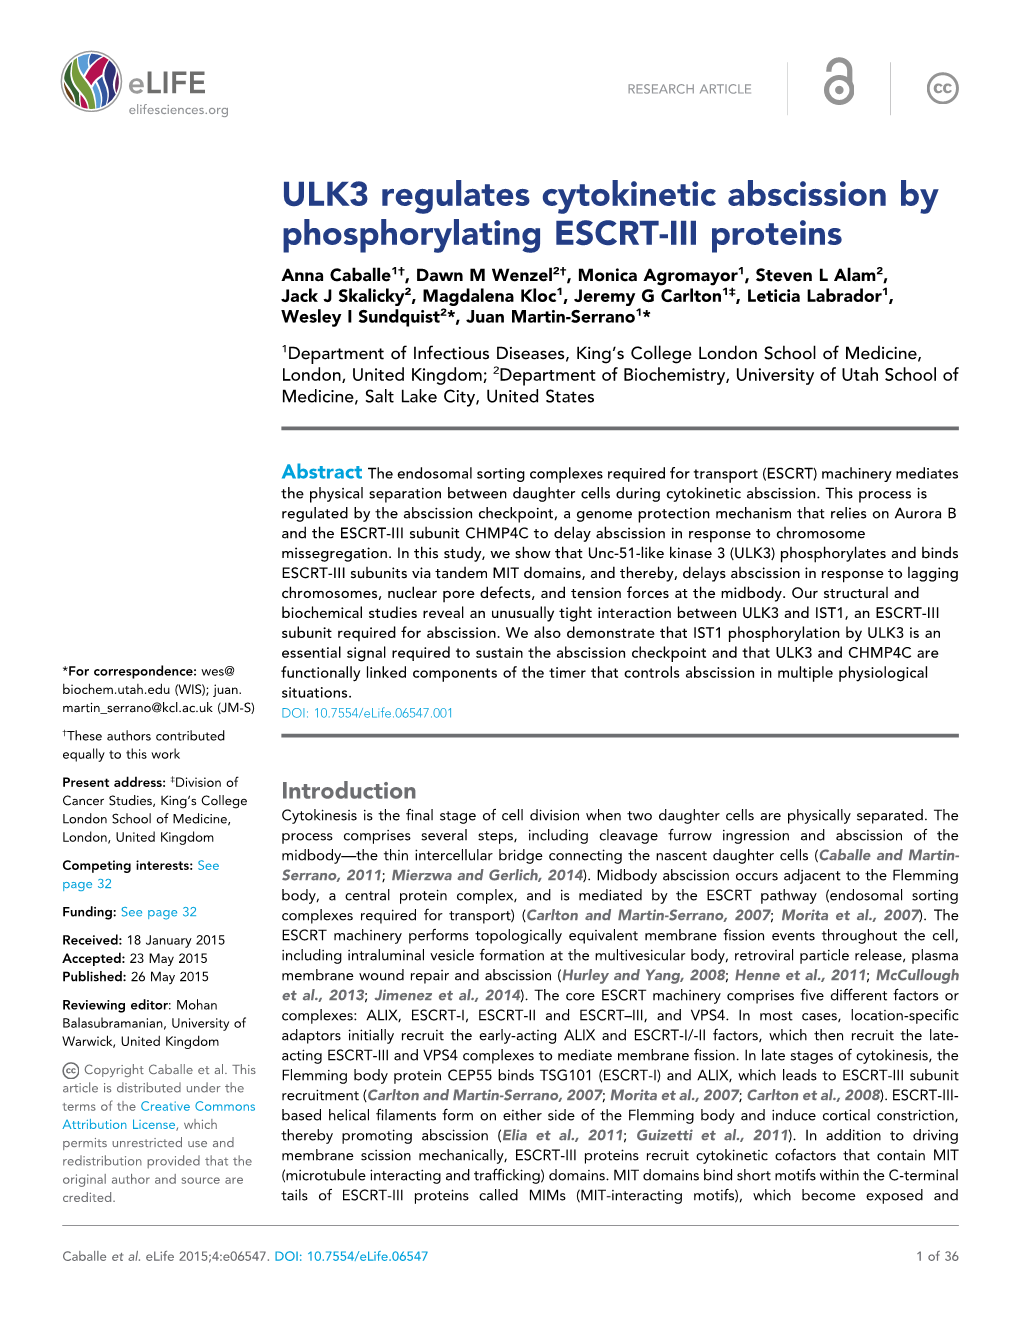 ULK3 Regulates Cytokinetic Abscission by Phosphorylating ESCRT-III